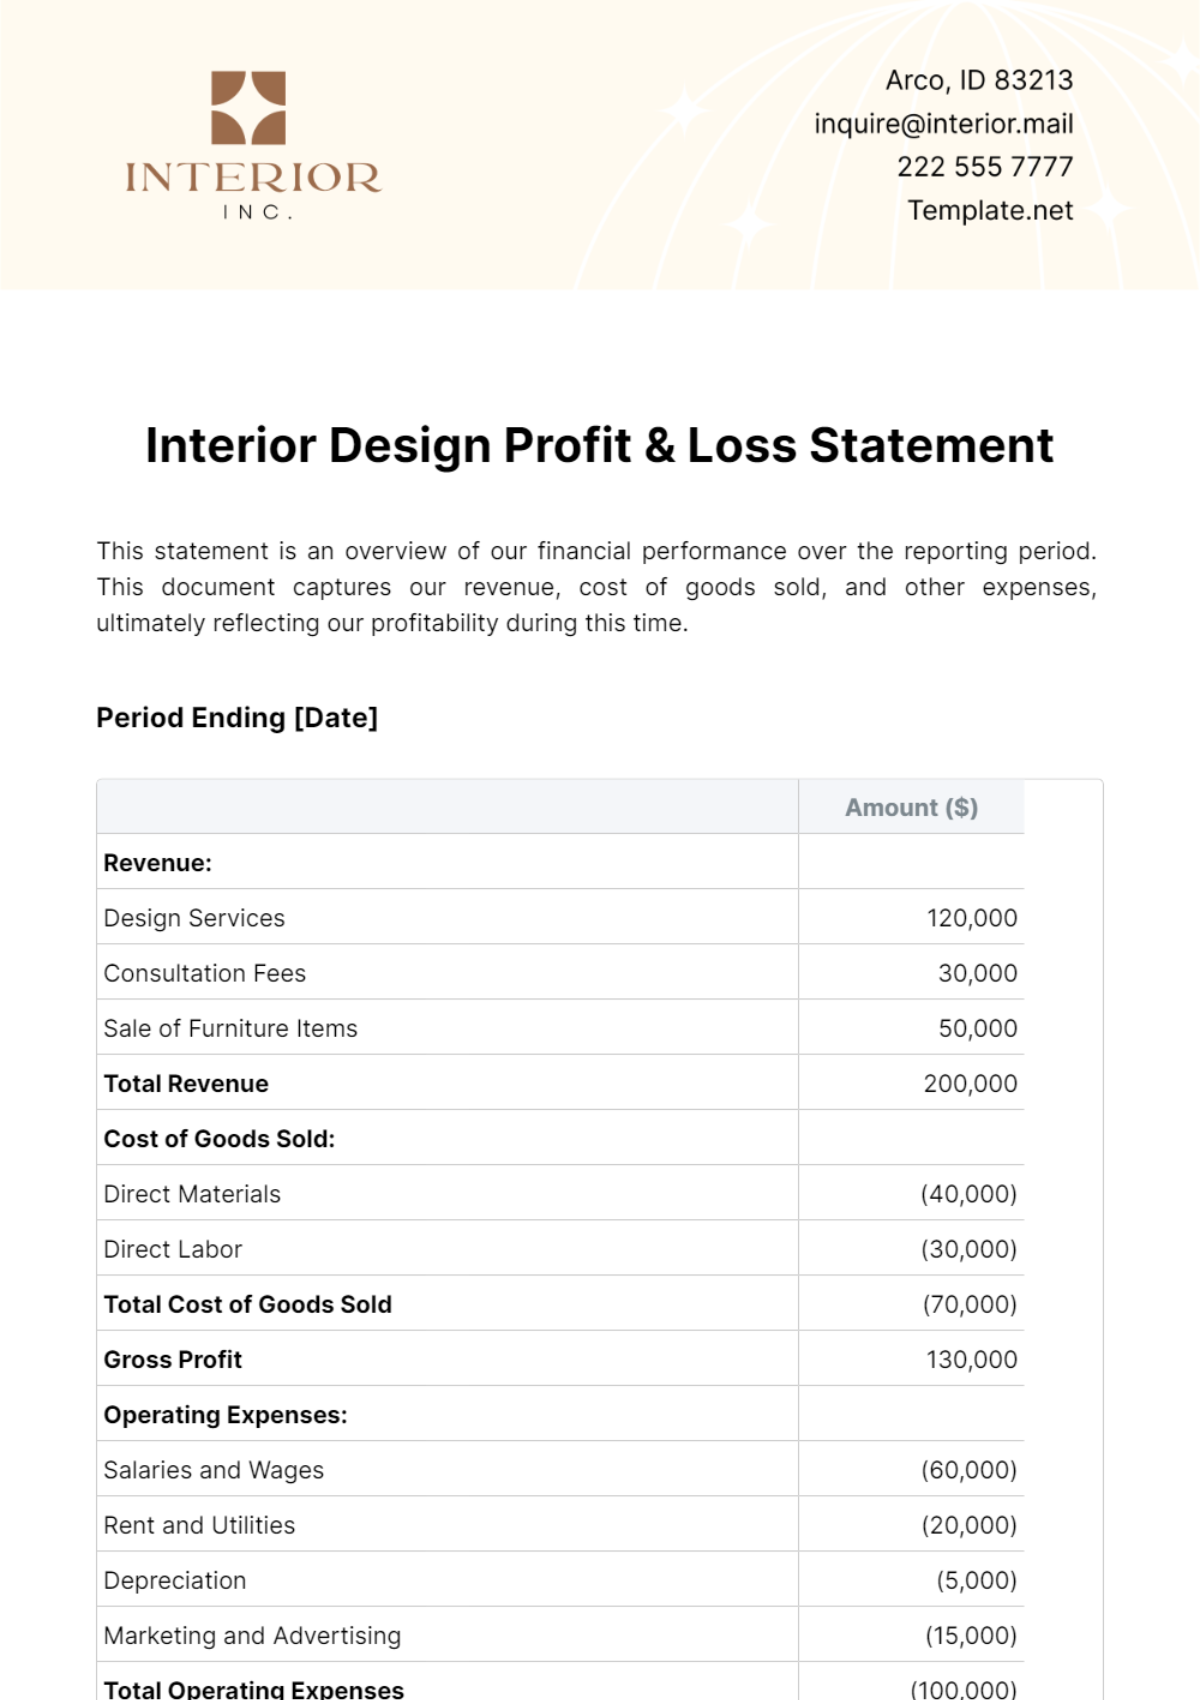 Interior Design Profit & Loss Statement Template